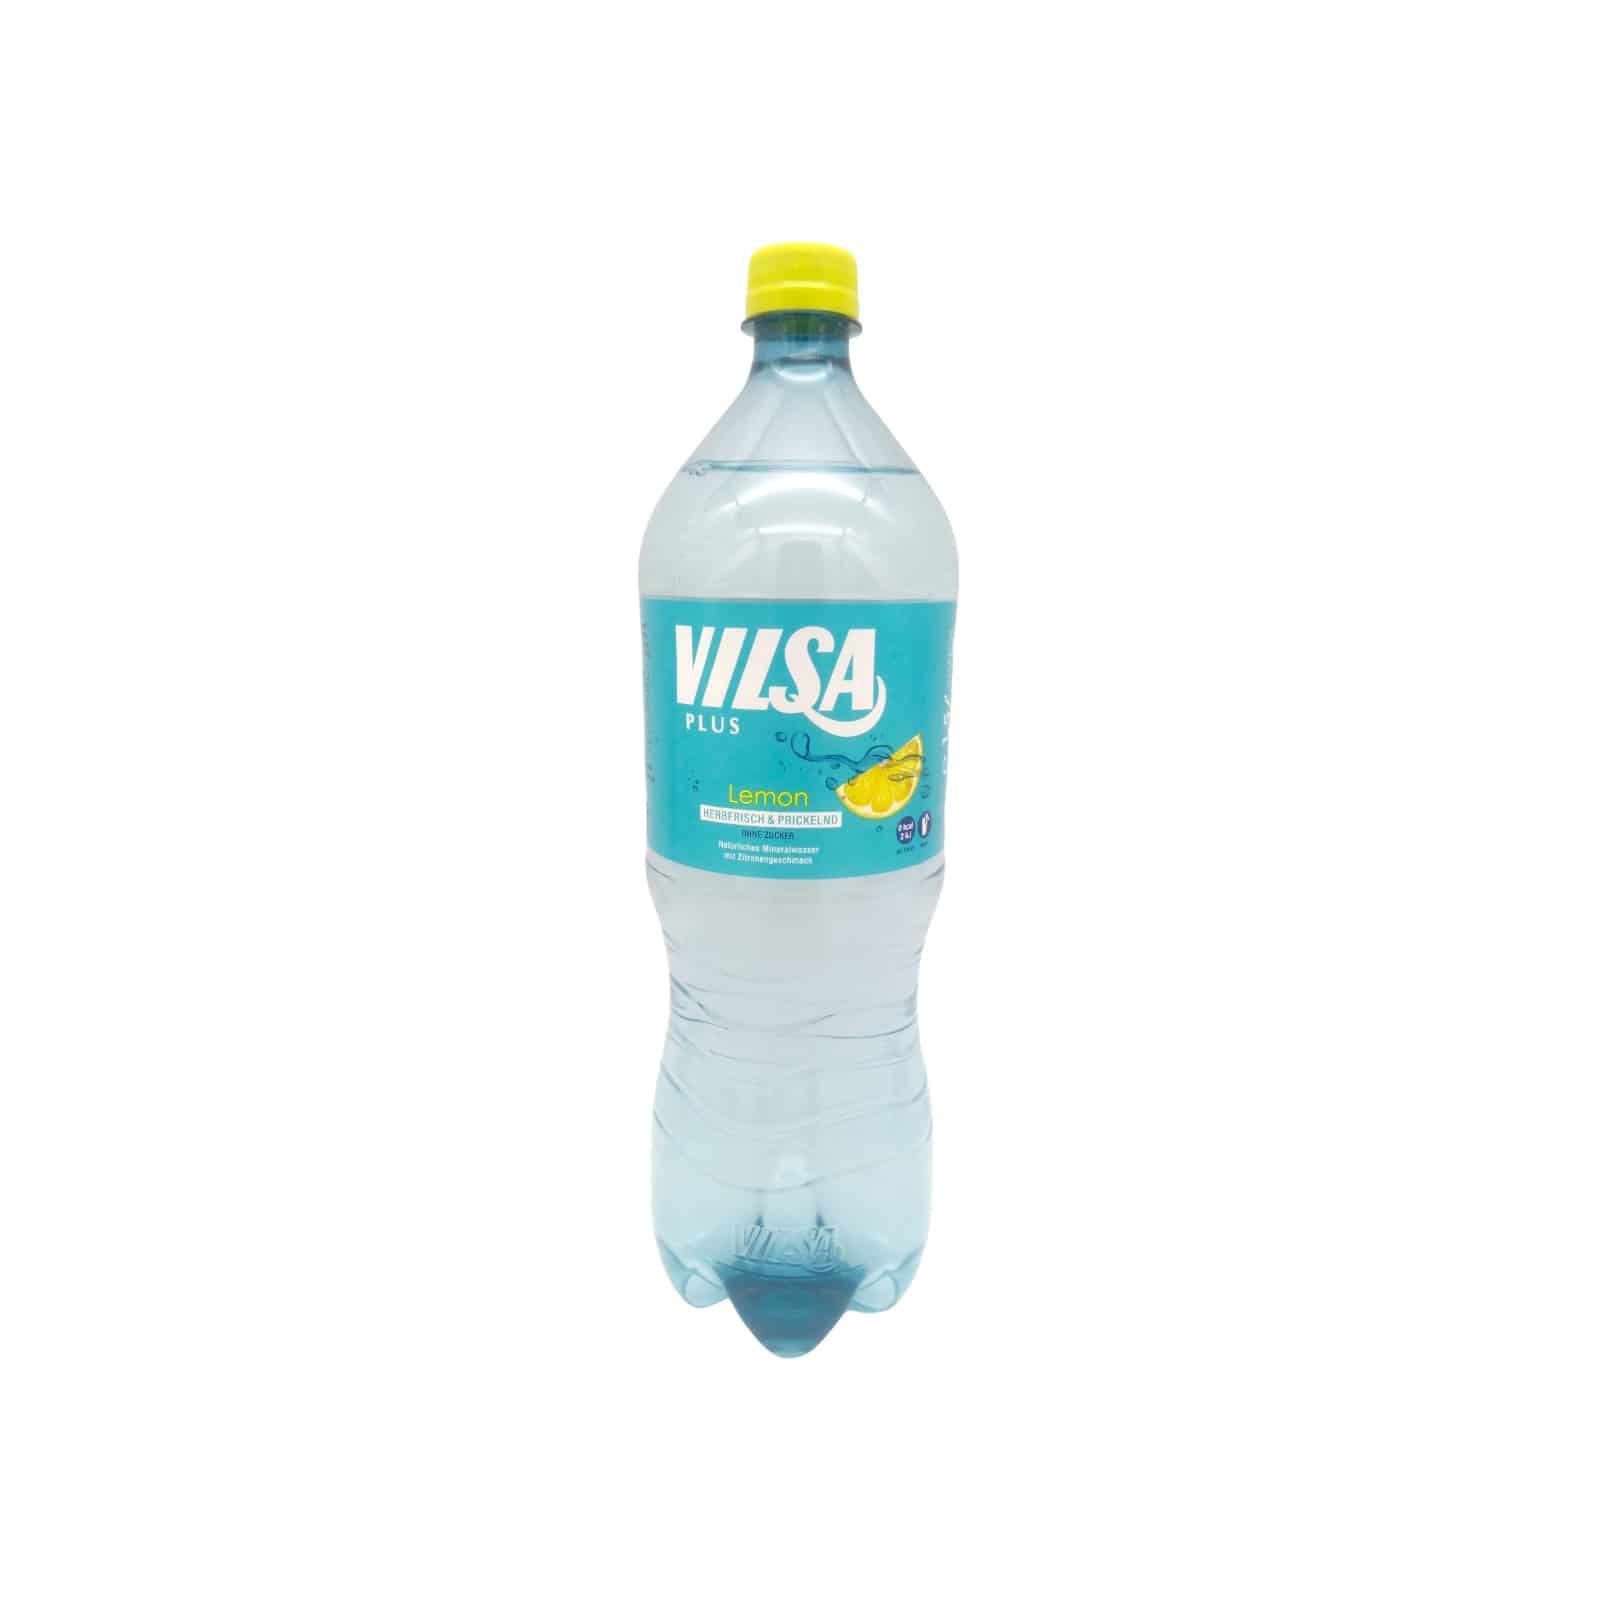 Vilsa Plus Lemon 1,5l